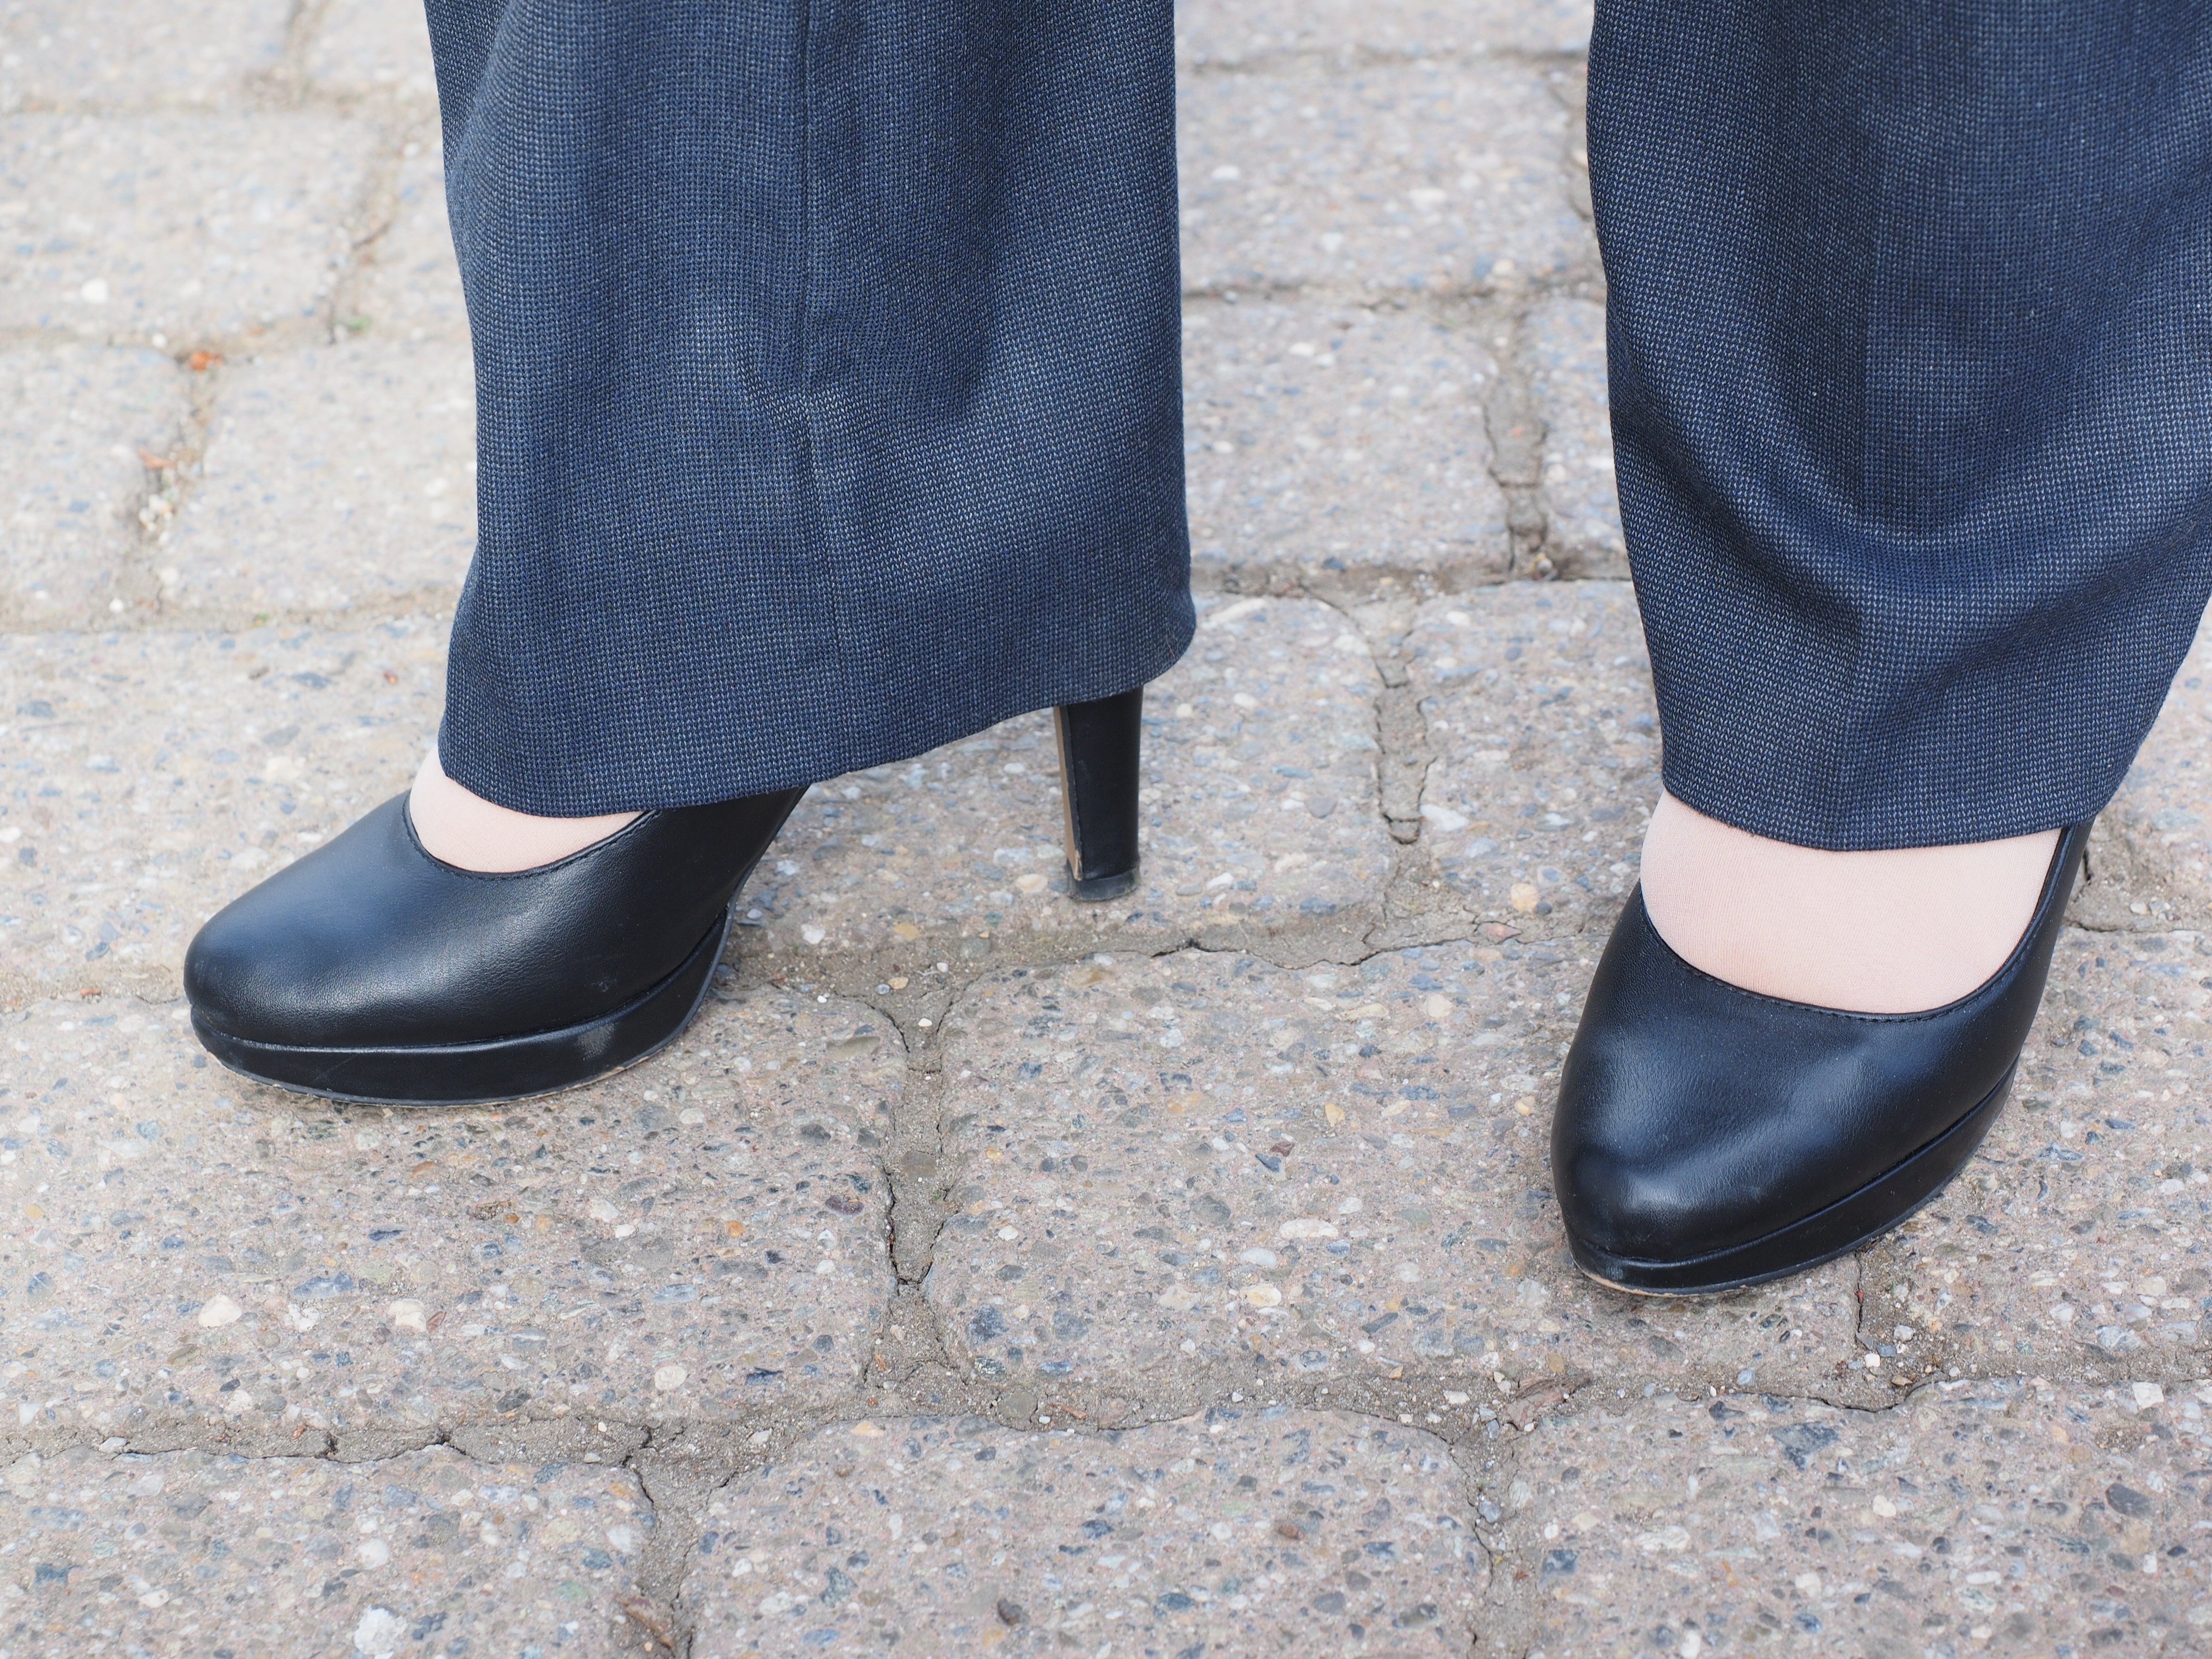 black leather platform heeled shoes and gray dress pants